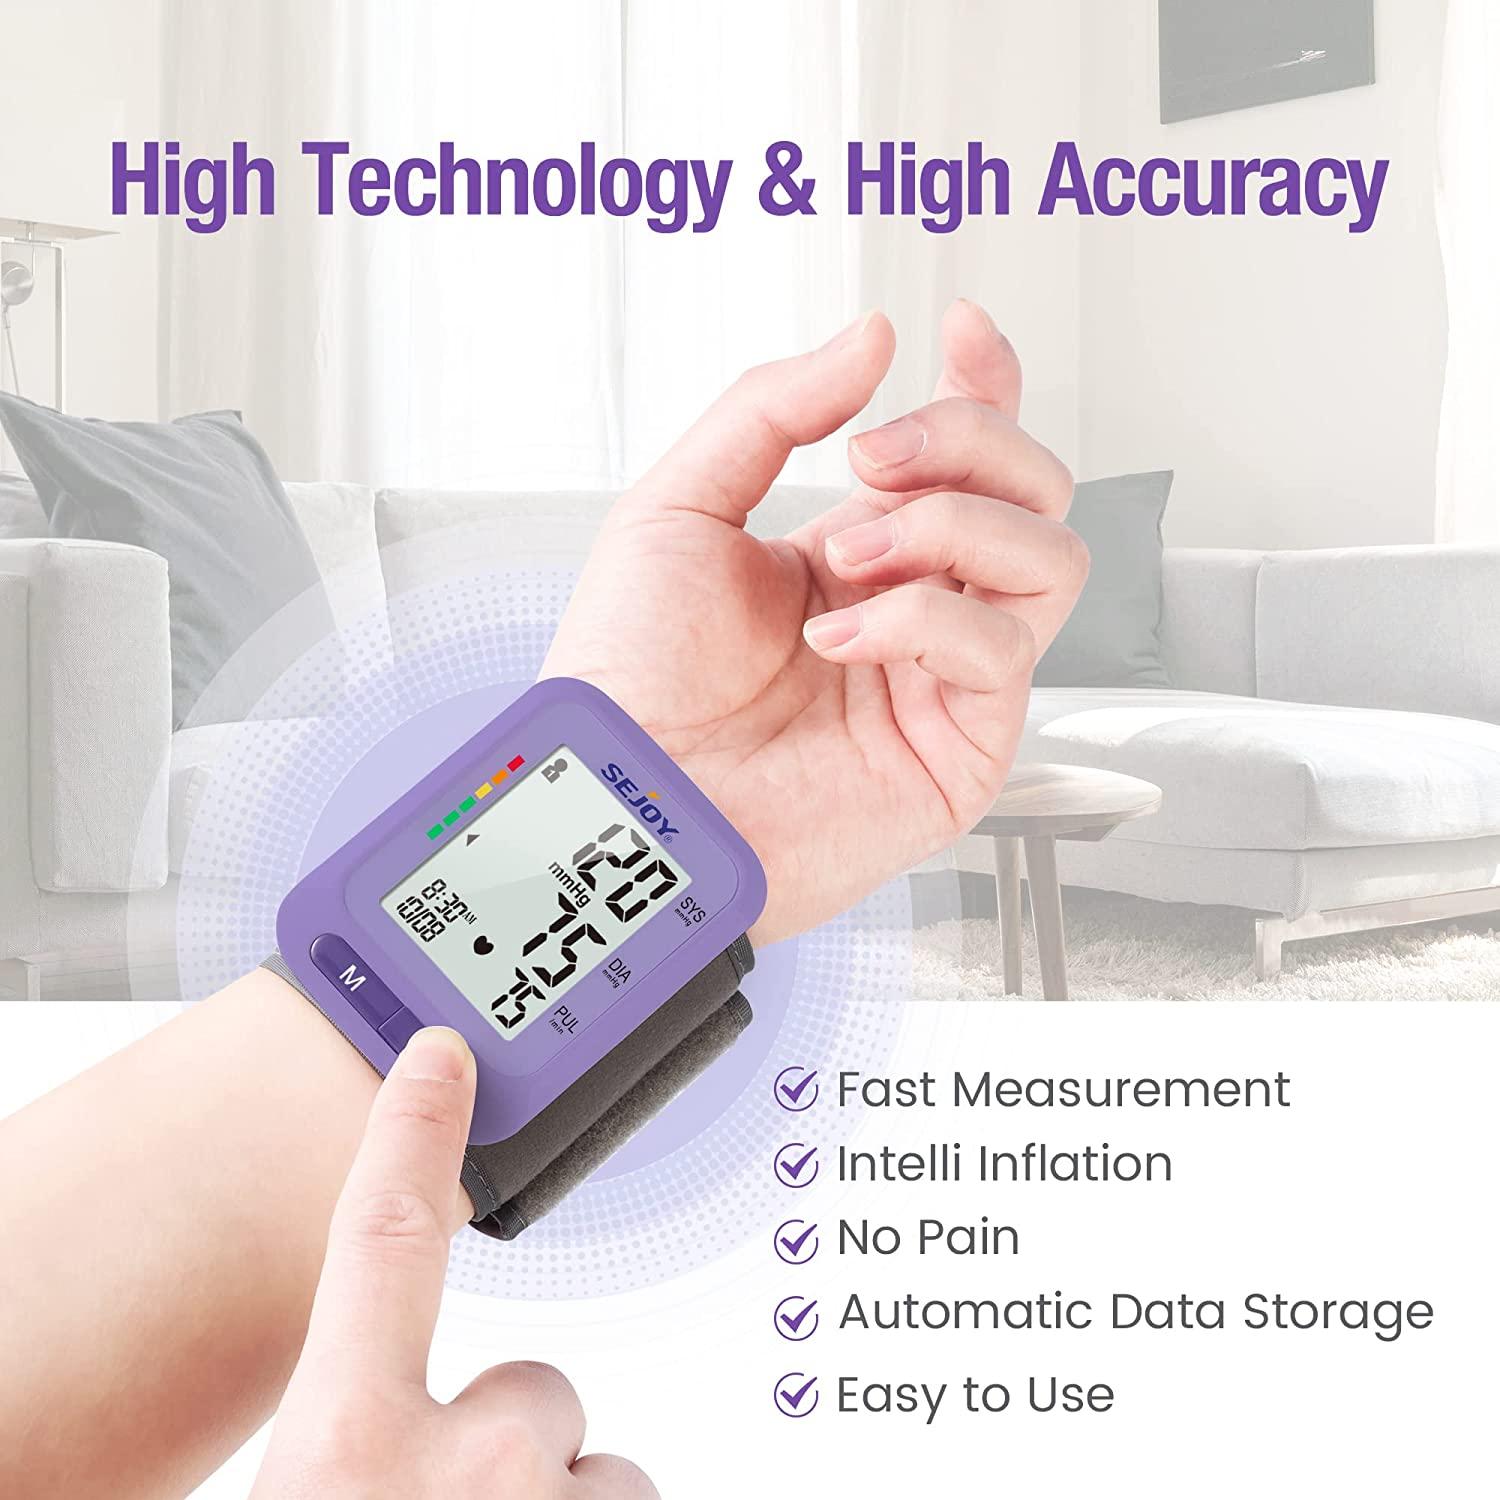 Blood Pressure Monitor XL Wrist Cuff 5.3-8.5 inch, Automatic Accurate BP  Machine, Large Screen Display, 120 Reading Memory, Irregular Heartbeat  Detector, Home Use Digital Blood-Pressure Monitor